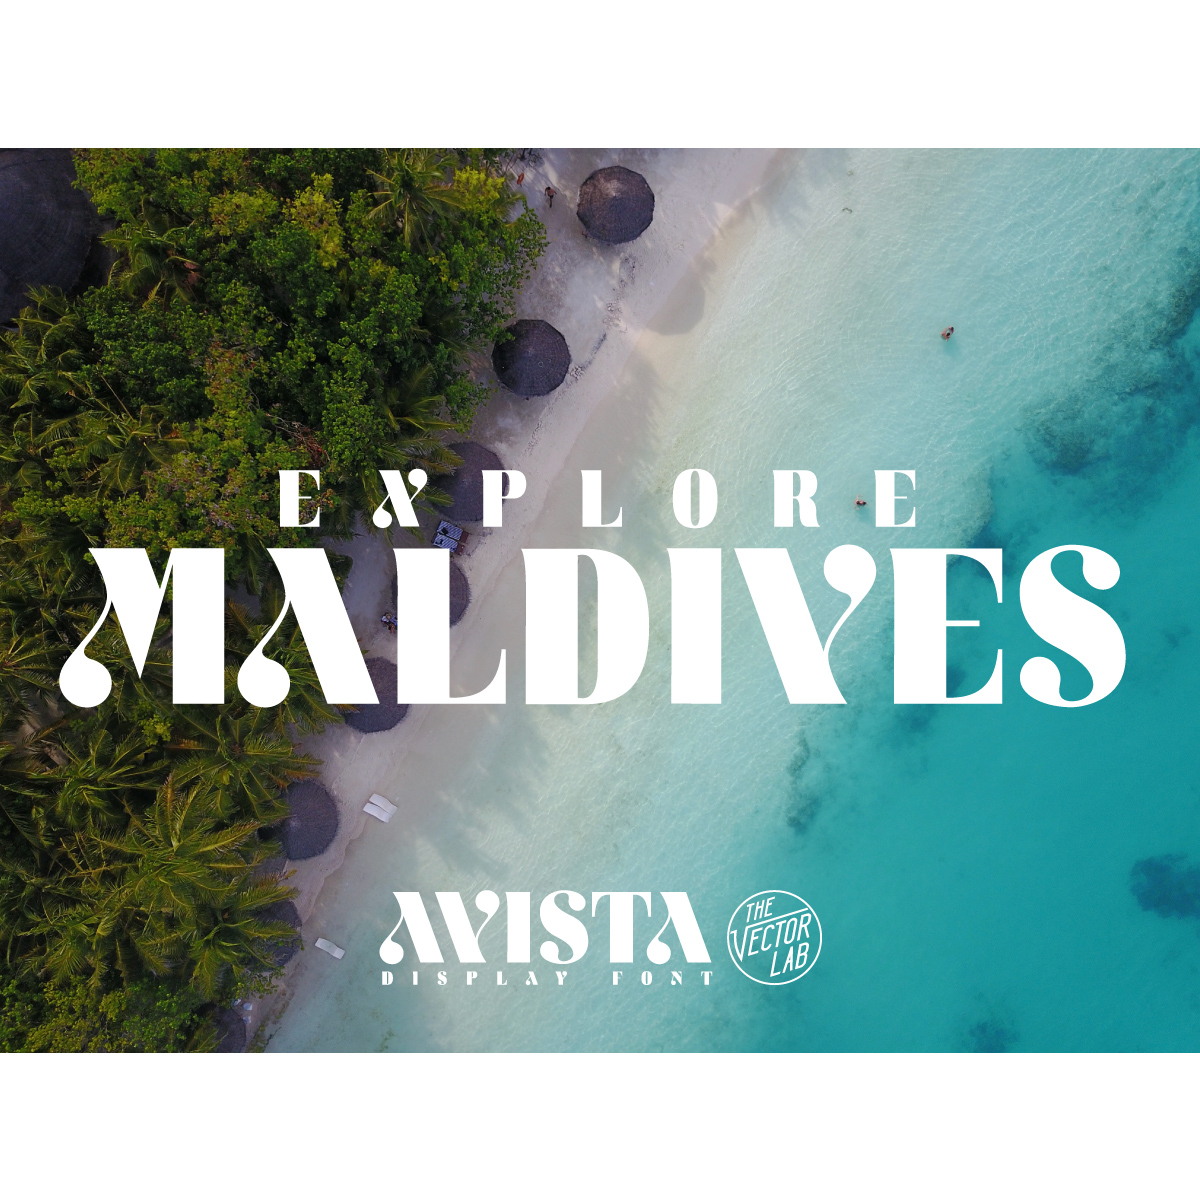 Explore Maldives - AVISTA font by Ray Dombroski & TheVectorLab